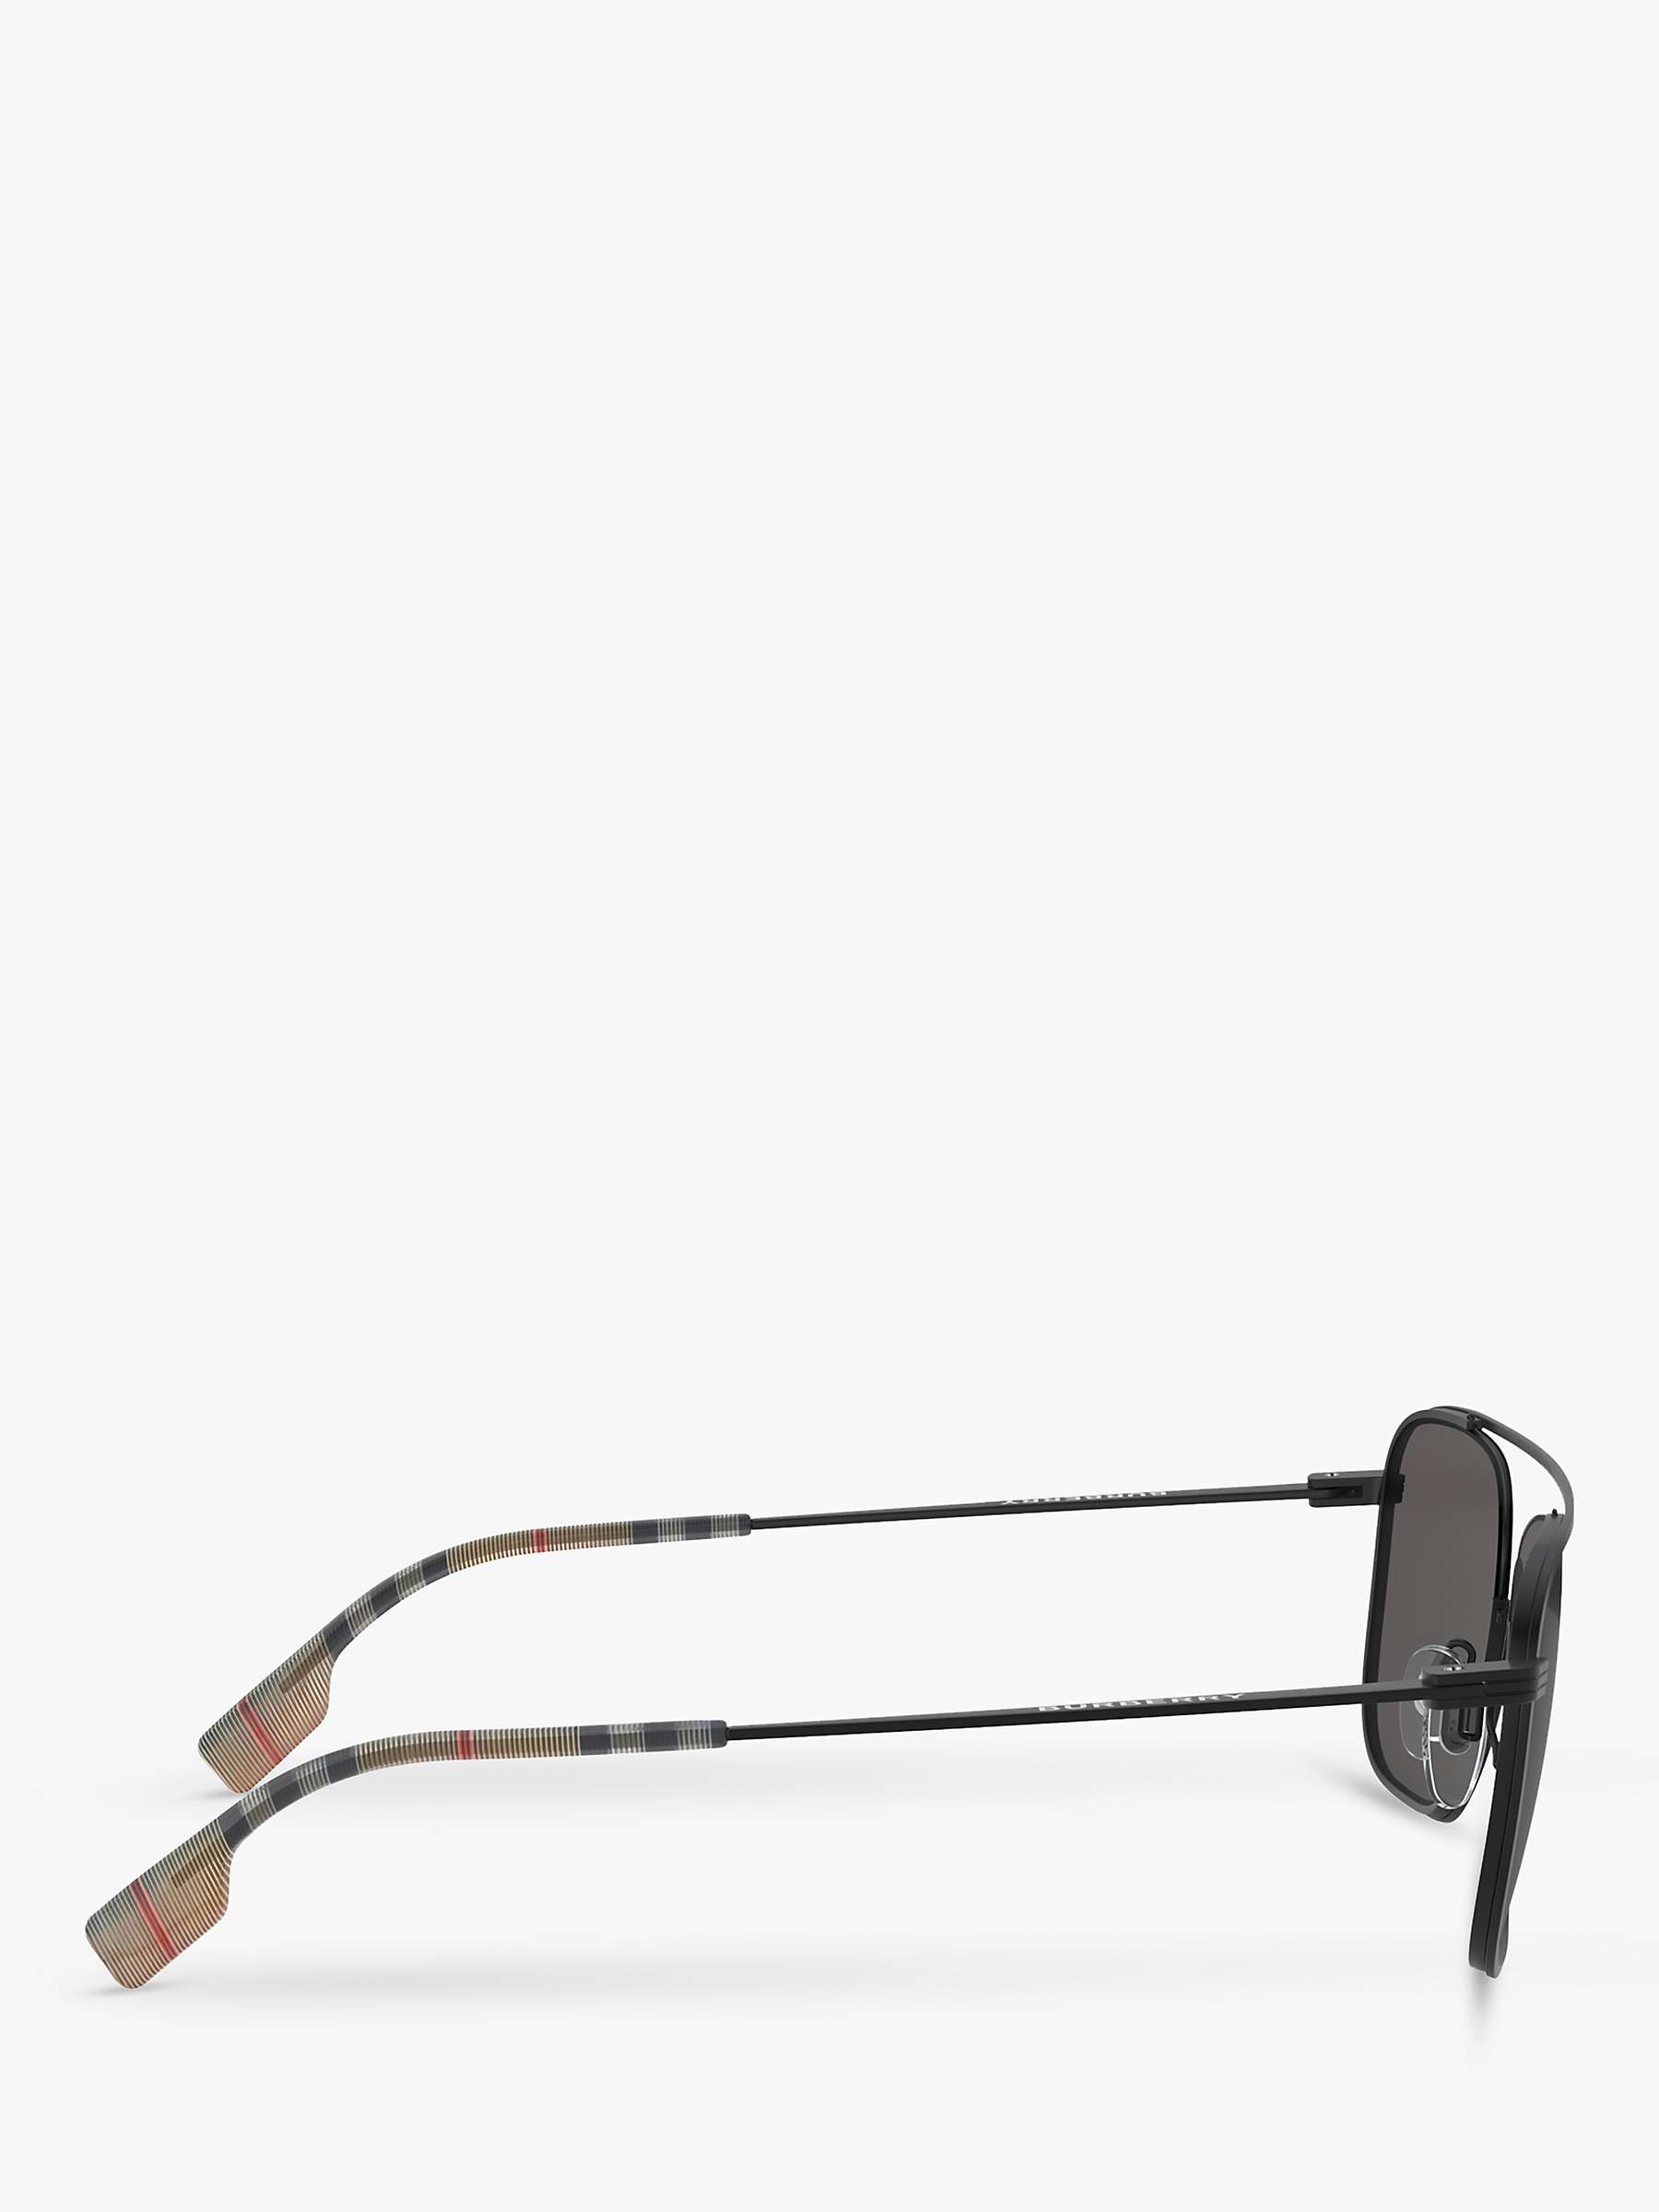 Buy Burberry BE3112 Men's Square Sunglasses, Matte Black/Grey Online at johnlewis.com